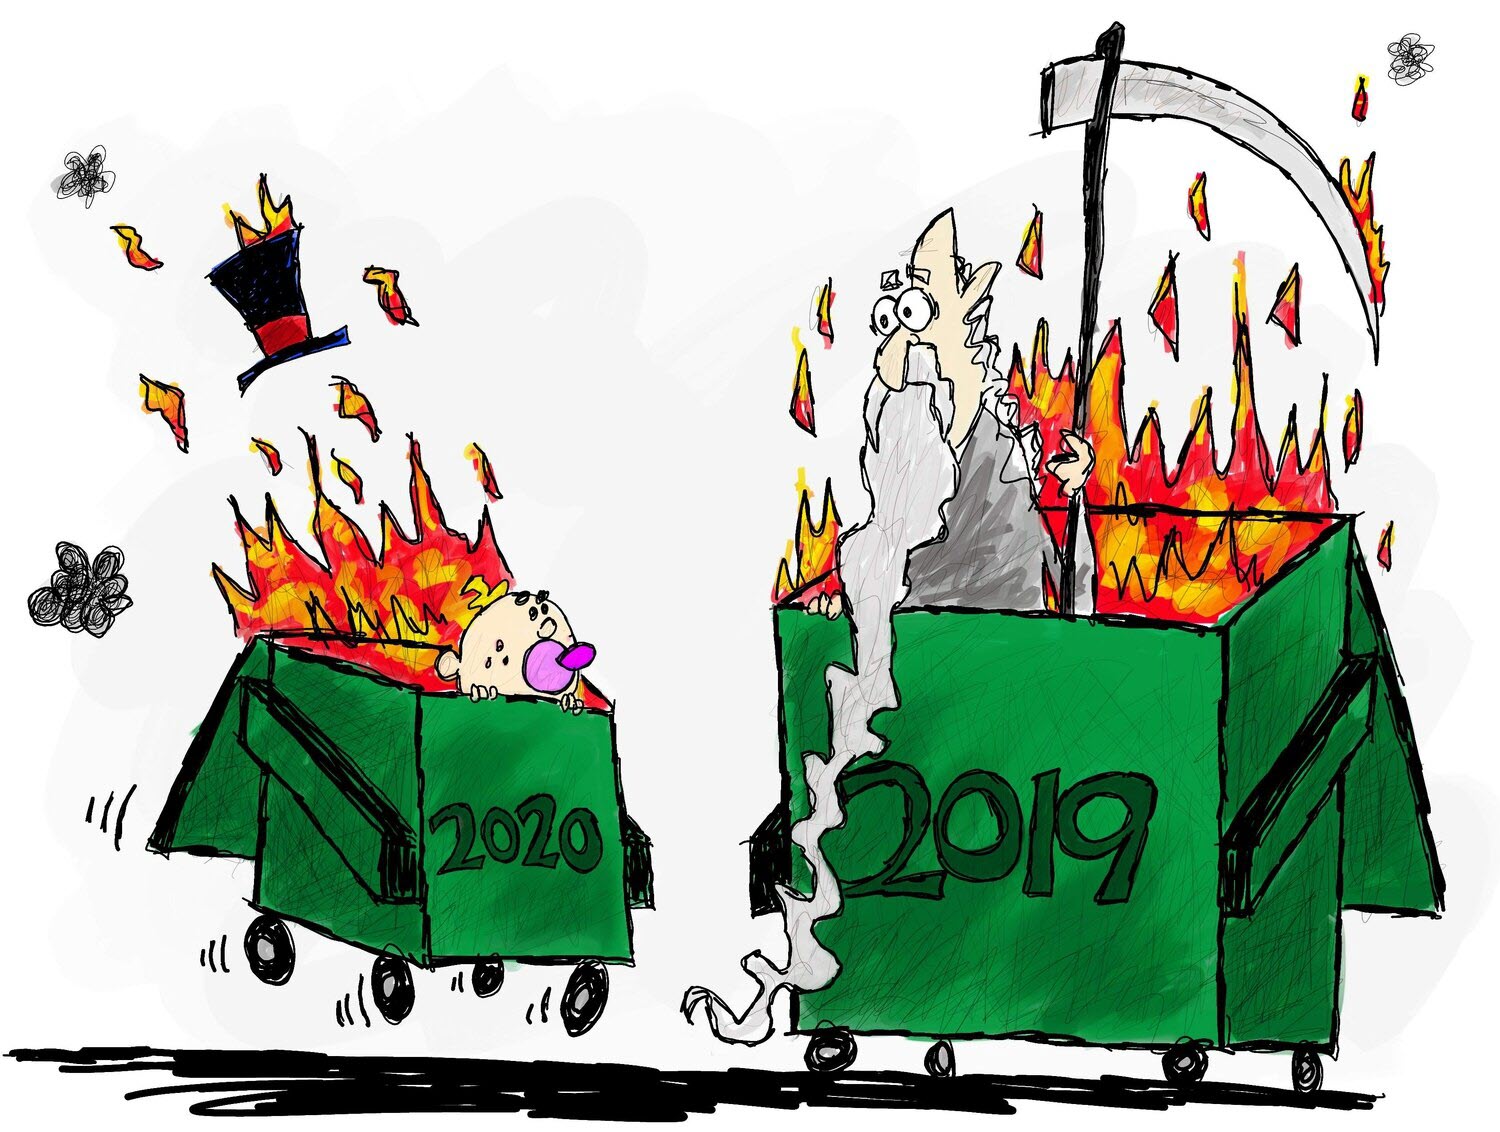 Goodbye 2019 hello 2020 Cartoon images